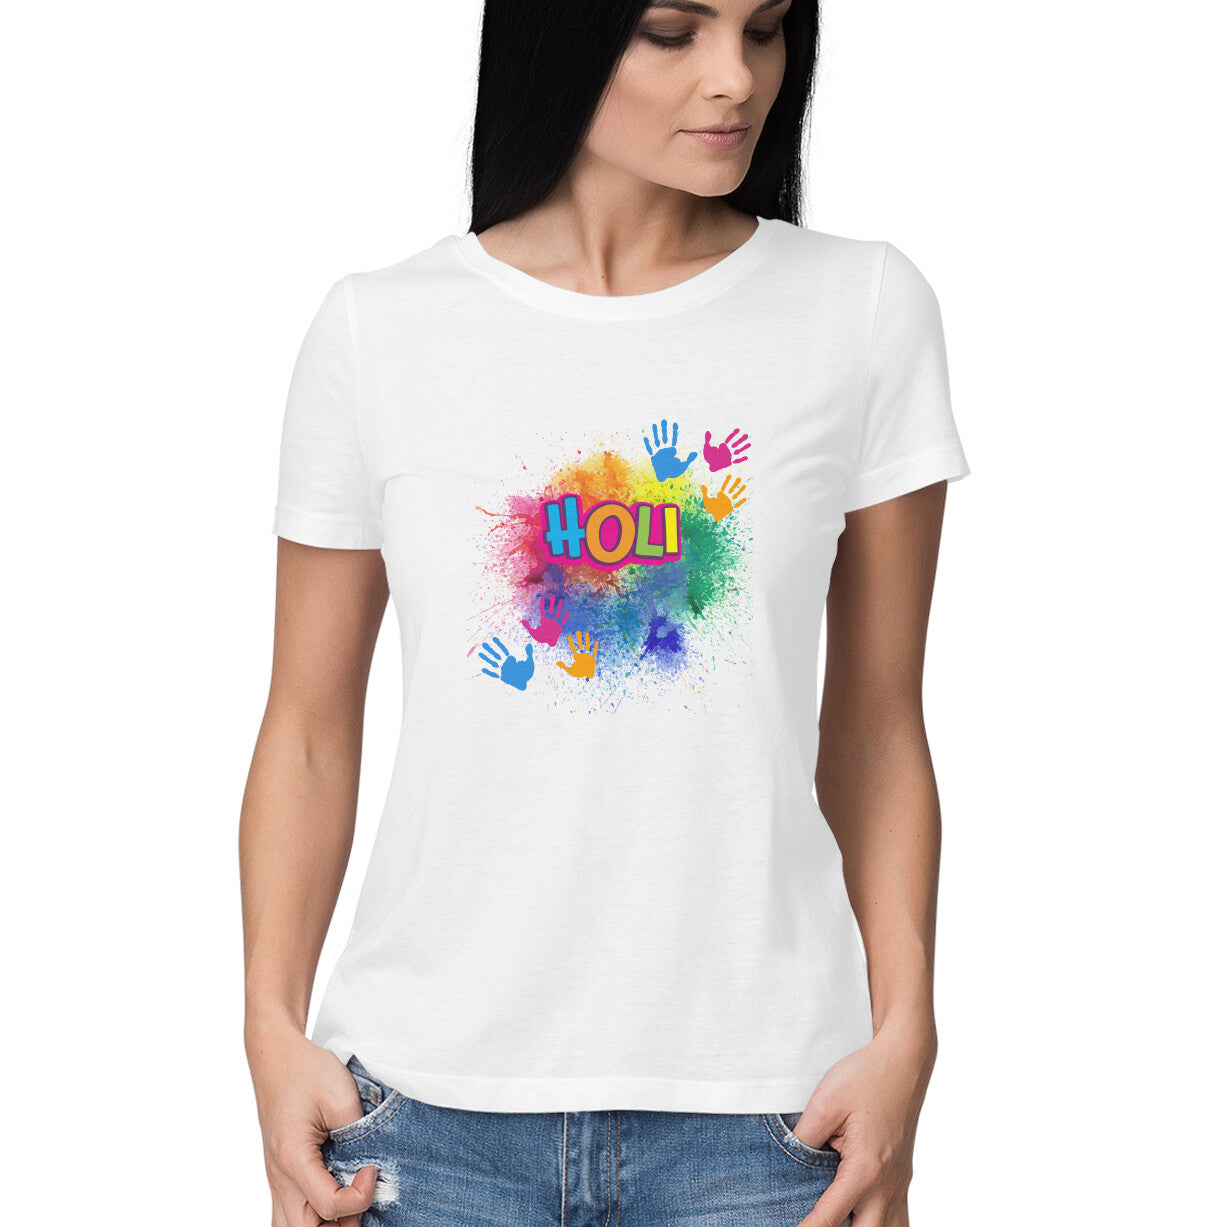 Splash into Holi: Women's Round Neck T-Shirt with Colorful Holi Splash Design